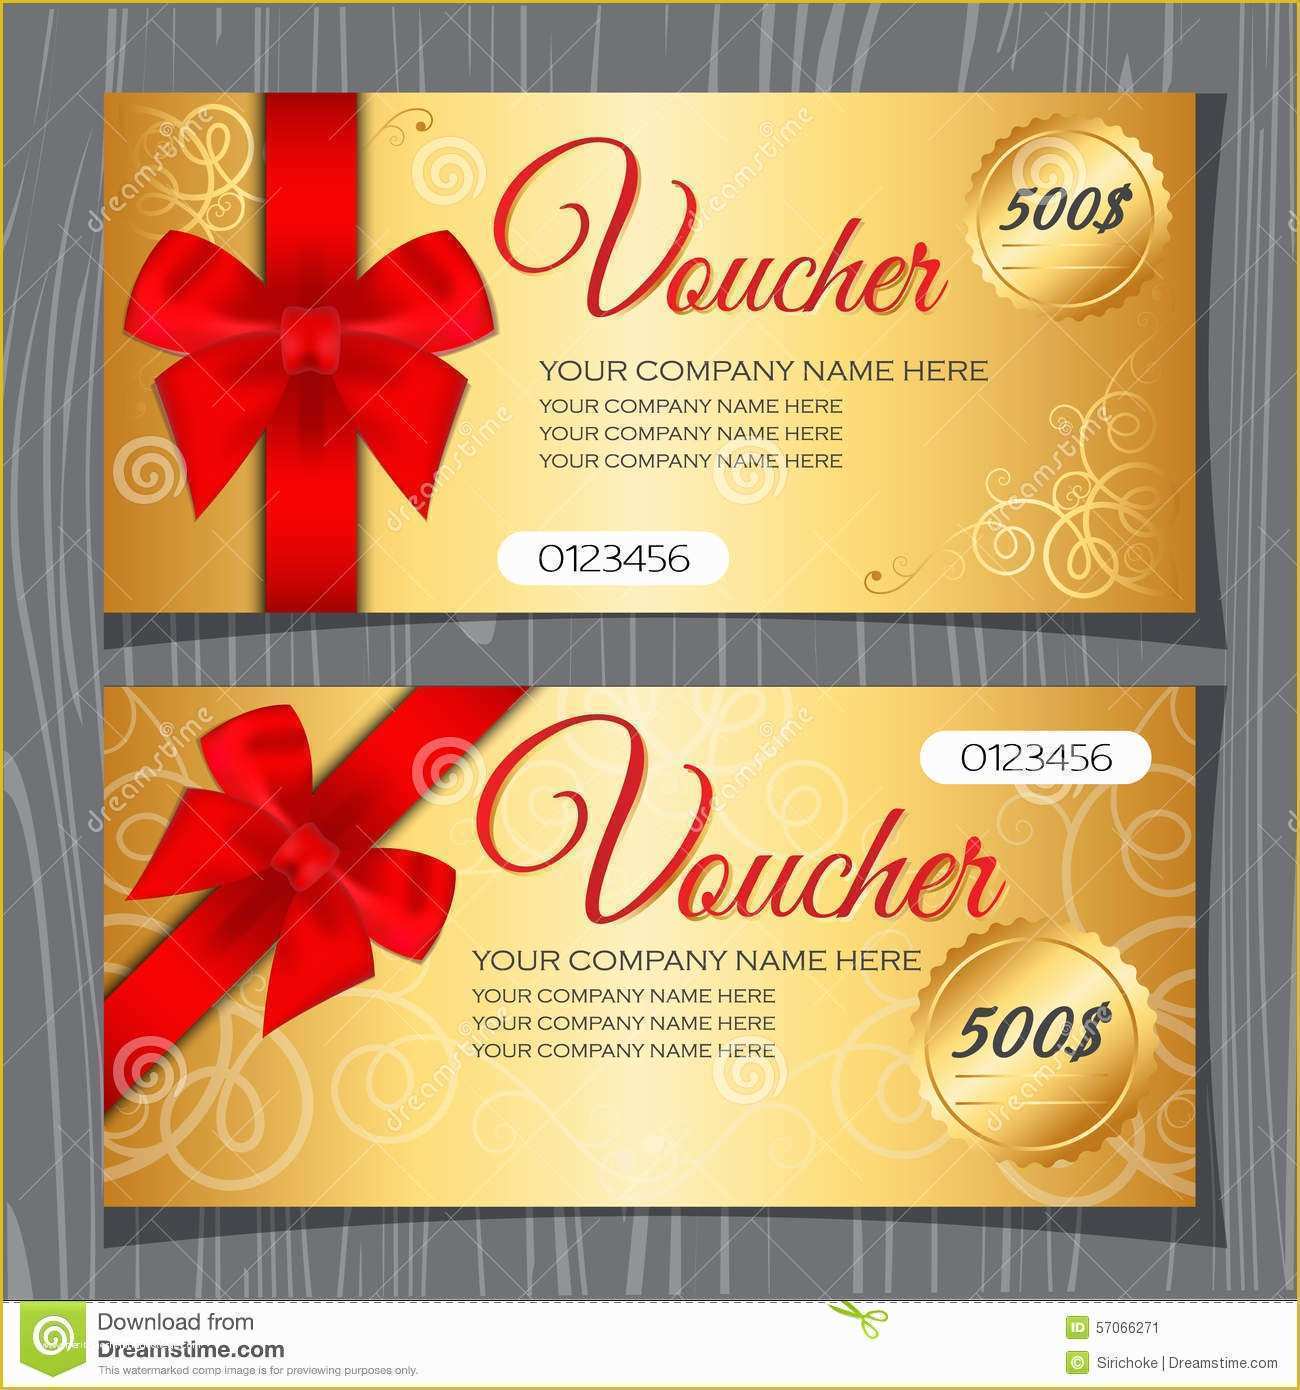 Travel Voucher Template Free Of Voucher Template Gift Certificate Stock Vector